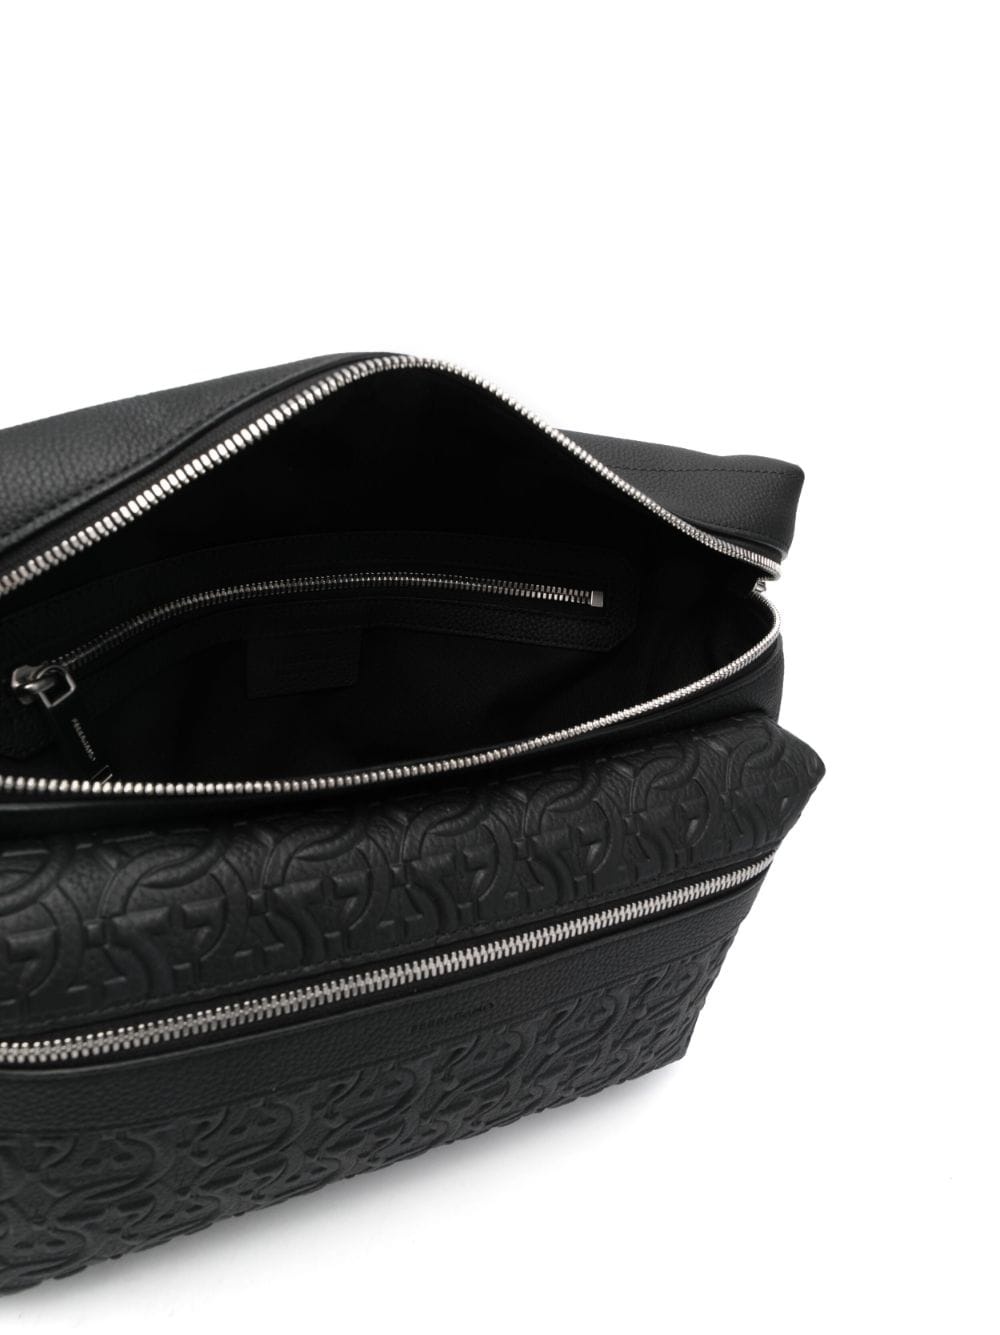 Gancini-pattern leather crossbody bag - 5